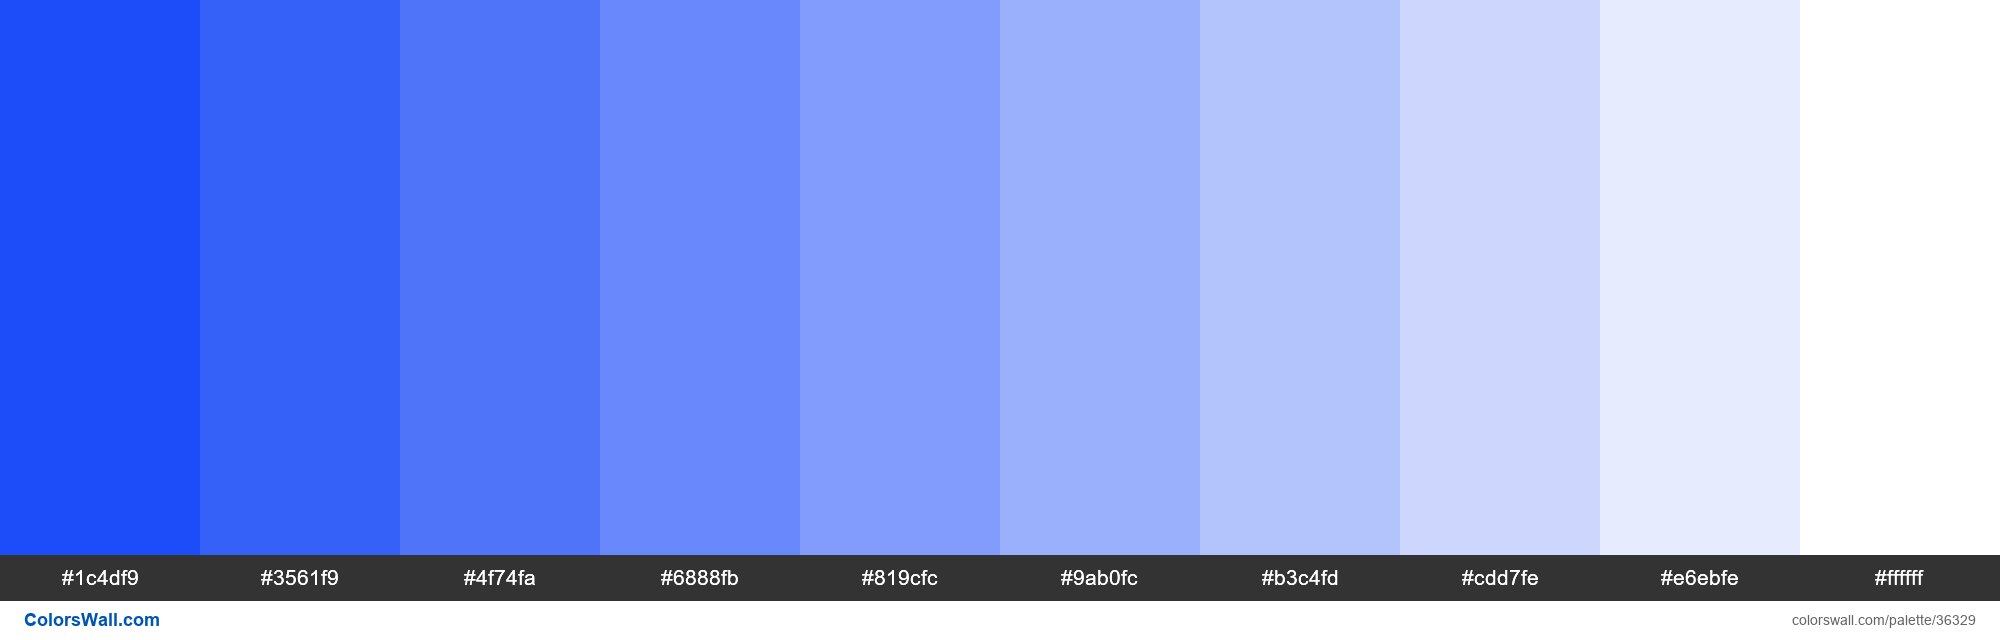 Shades XKCD Color indigo blue #3a18b1 hex colors palette - ColorsWall